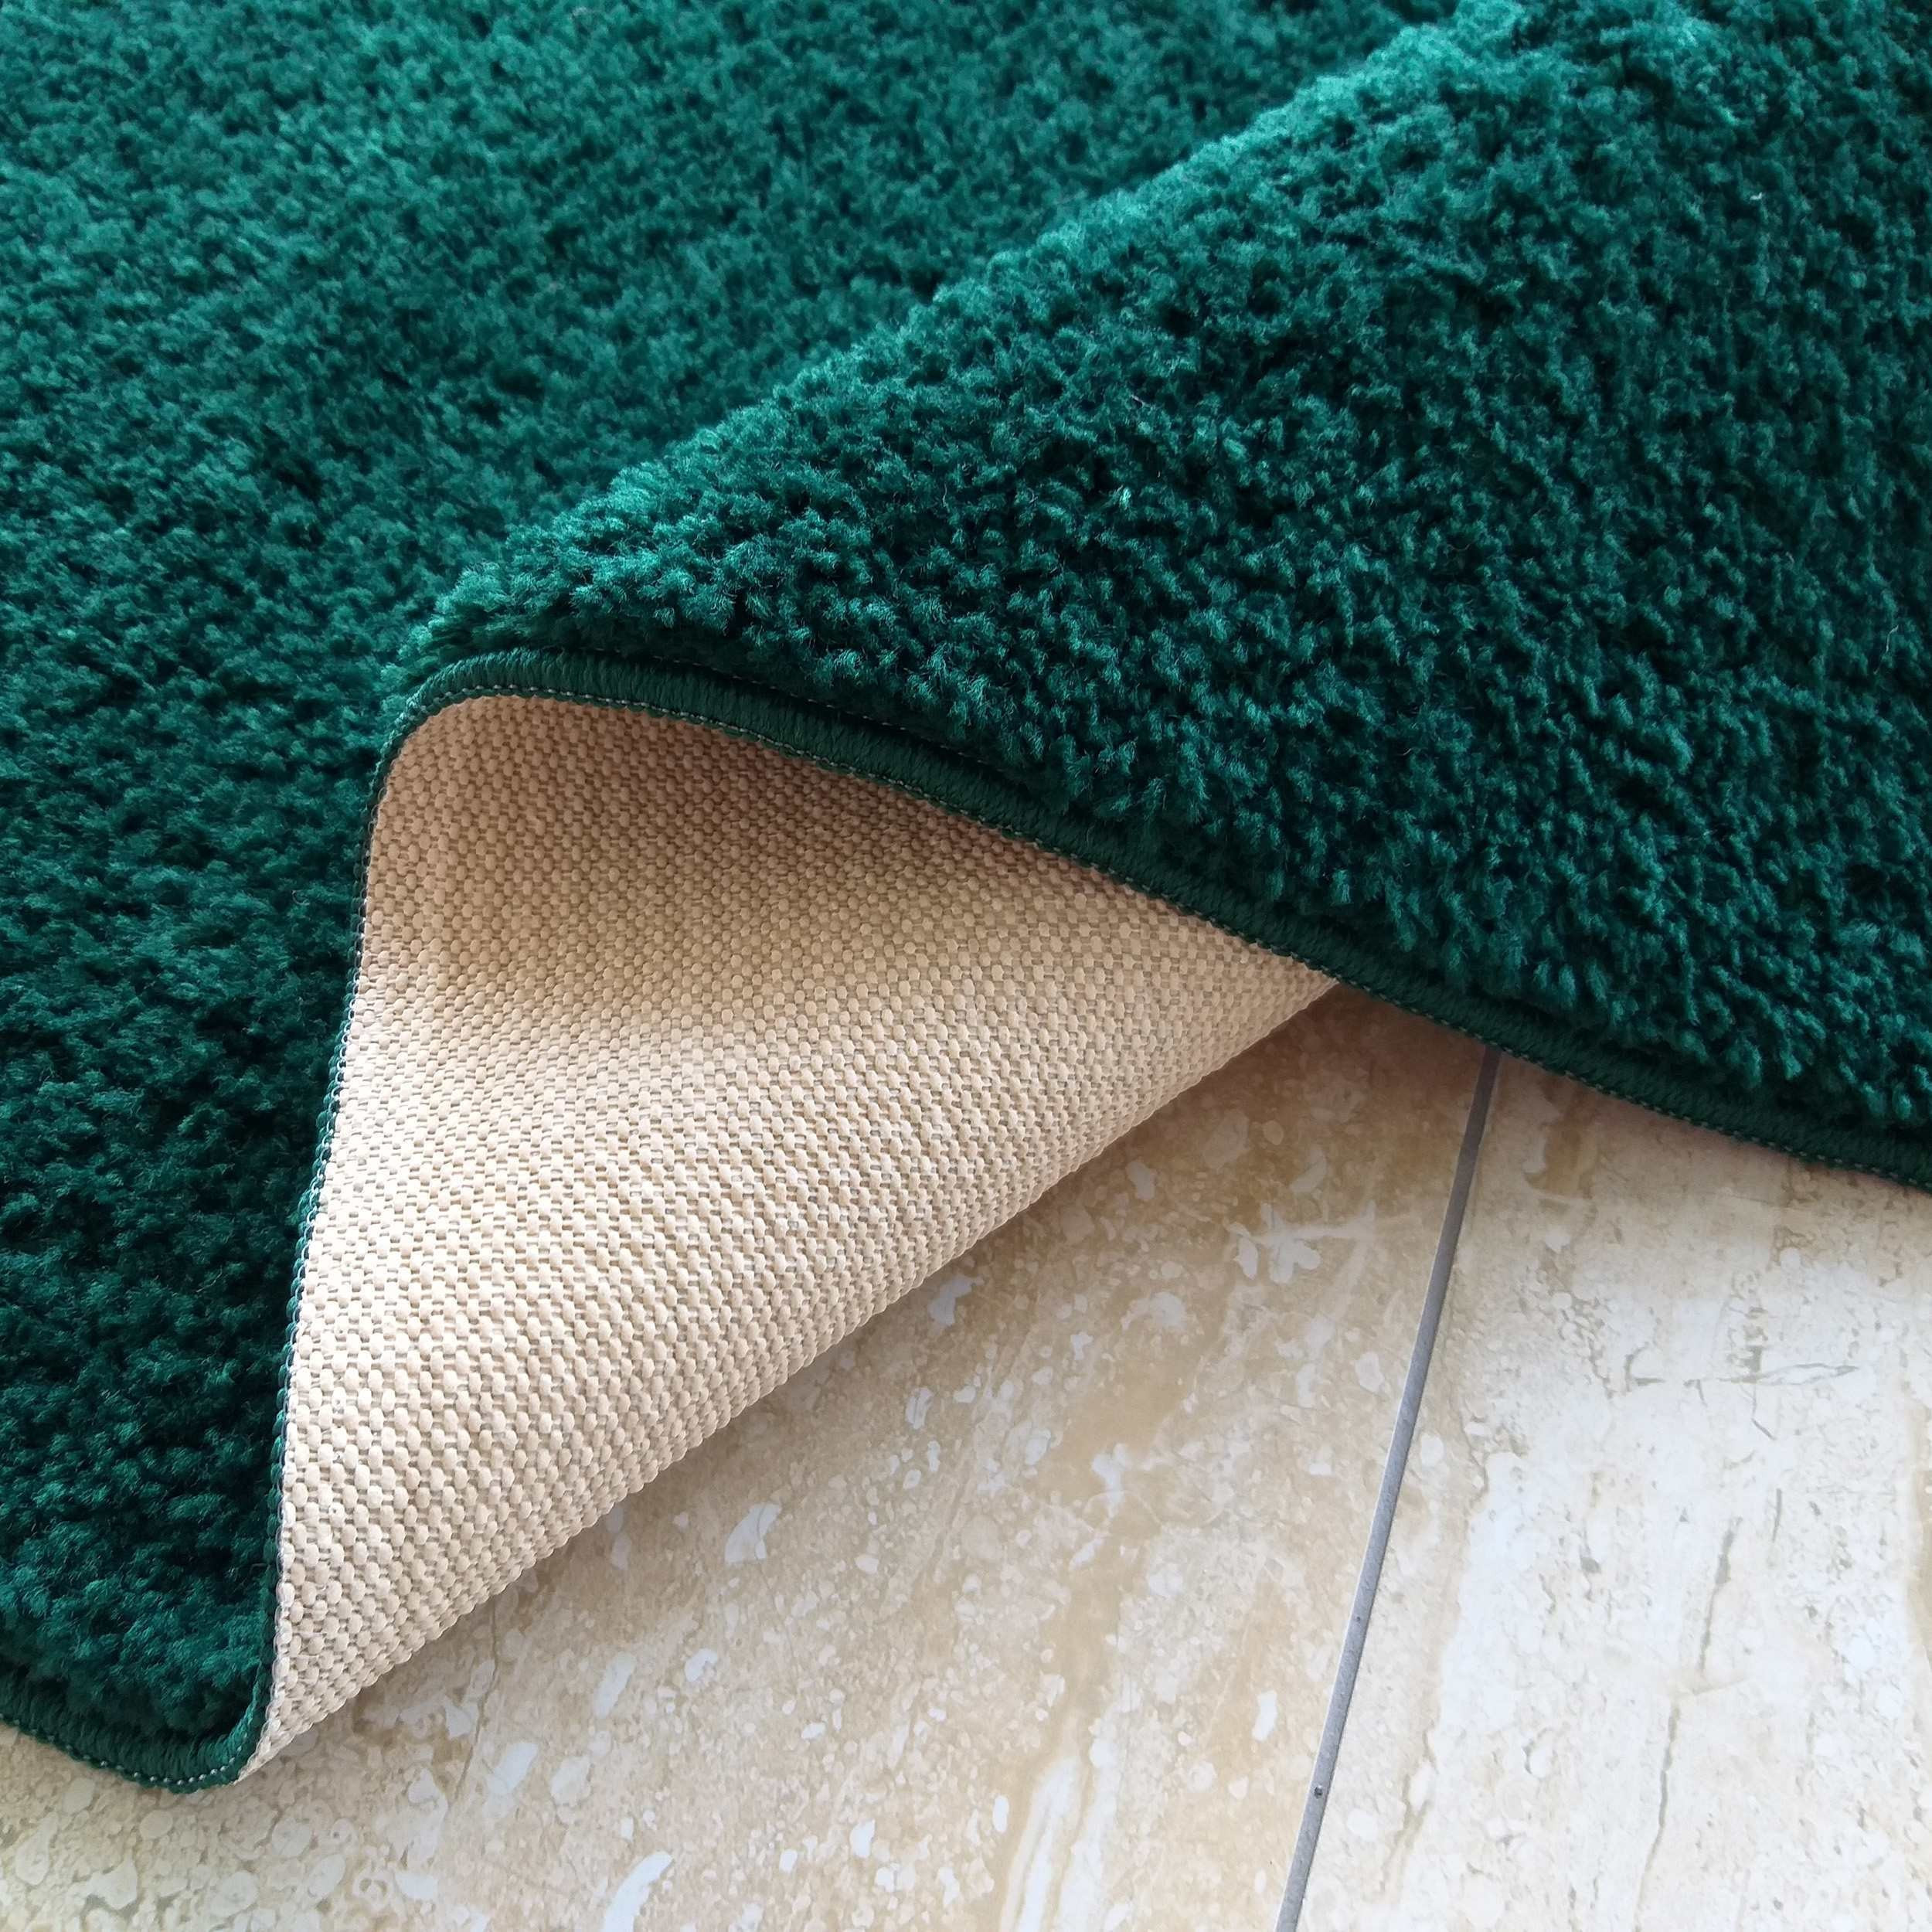 Metrážny koberec Kamel typu Shaggy zelený 400x320 cm - Výpredaj